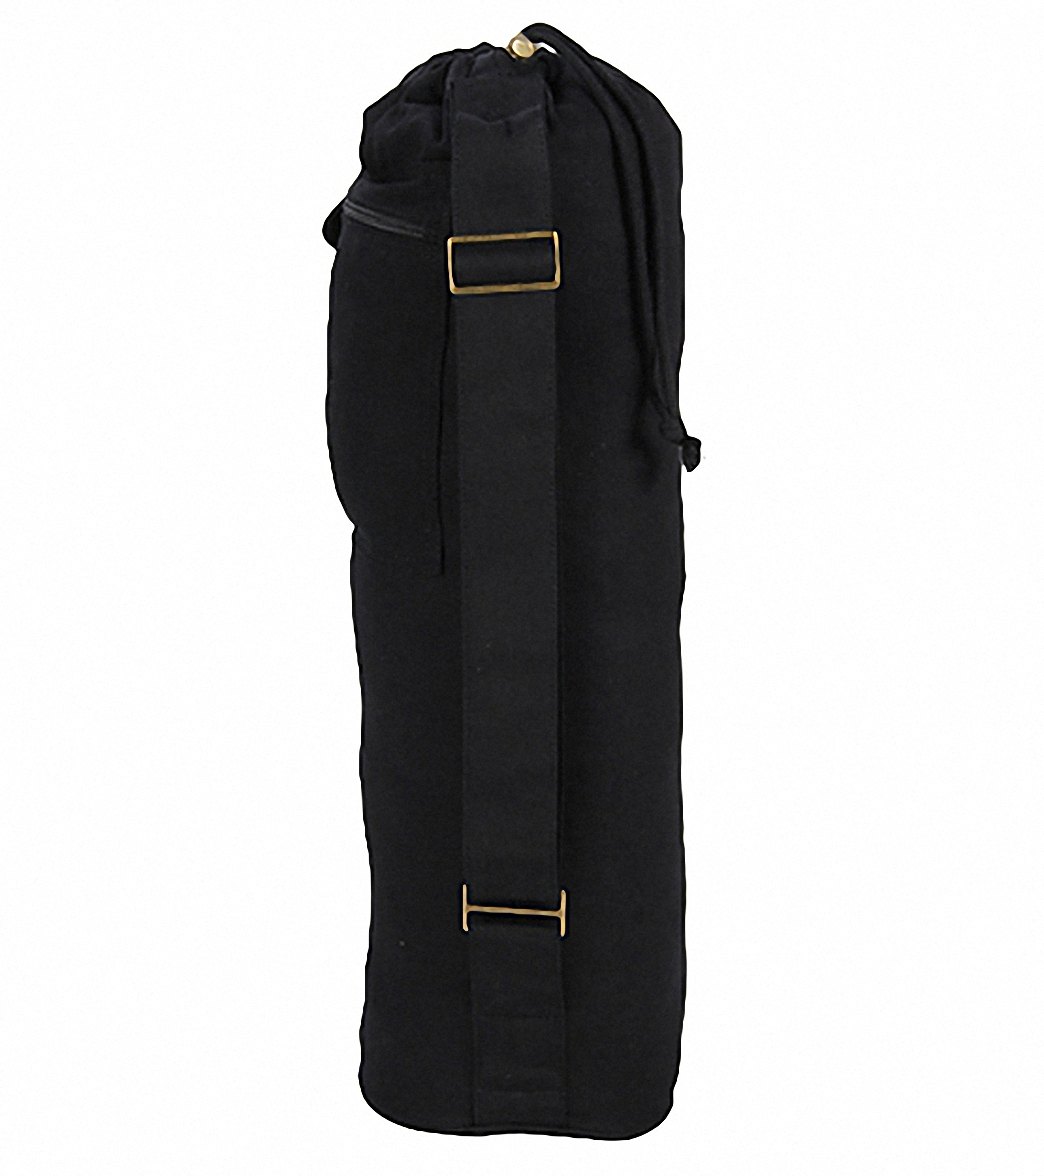 Gaiam Maxwell Yoga Mat Bag Black New w/Tags 25 Long, 9 Wide 6 Small  Pockets